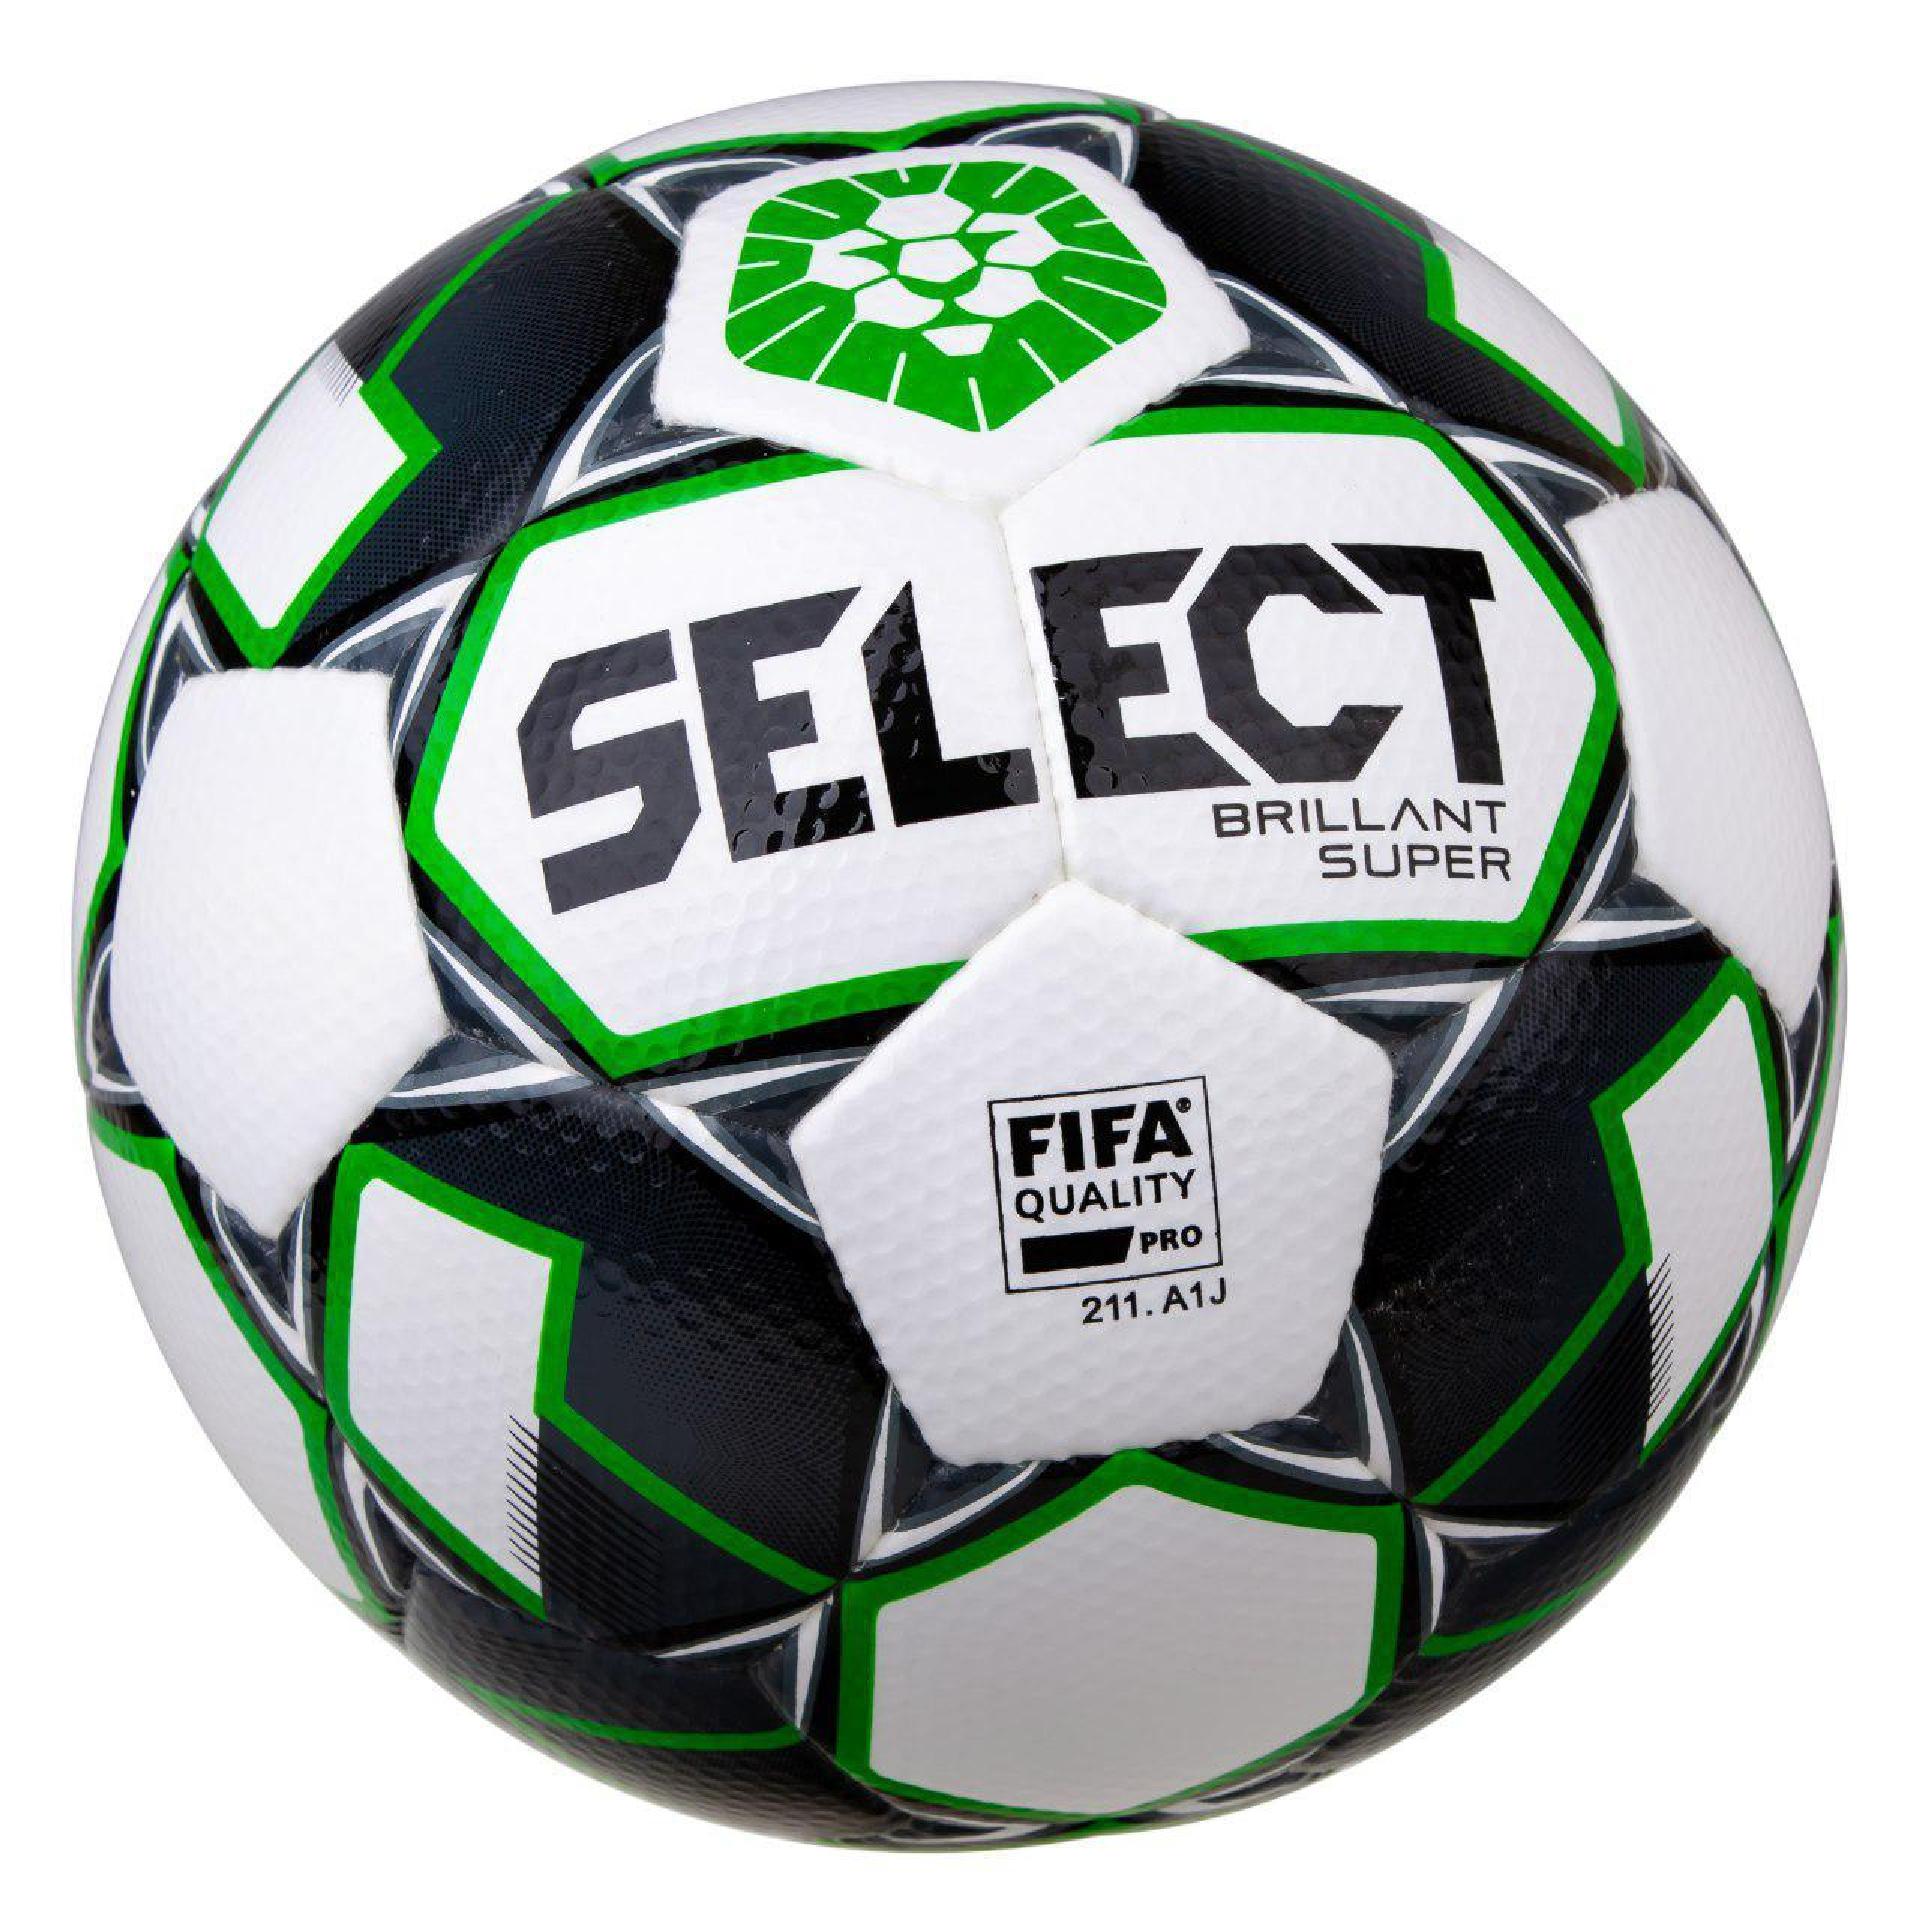 Fifa quality pro. Select мяч FIFA brillant super Brilliant. Select brillant super TB, мяч футбольный ((001) бел/оранж/син, 5) 810316.001. 811322-001 Мяч select Brilliant super. Мяч футбольный select brillant super FIFA 2015.